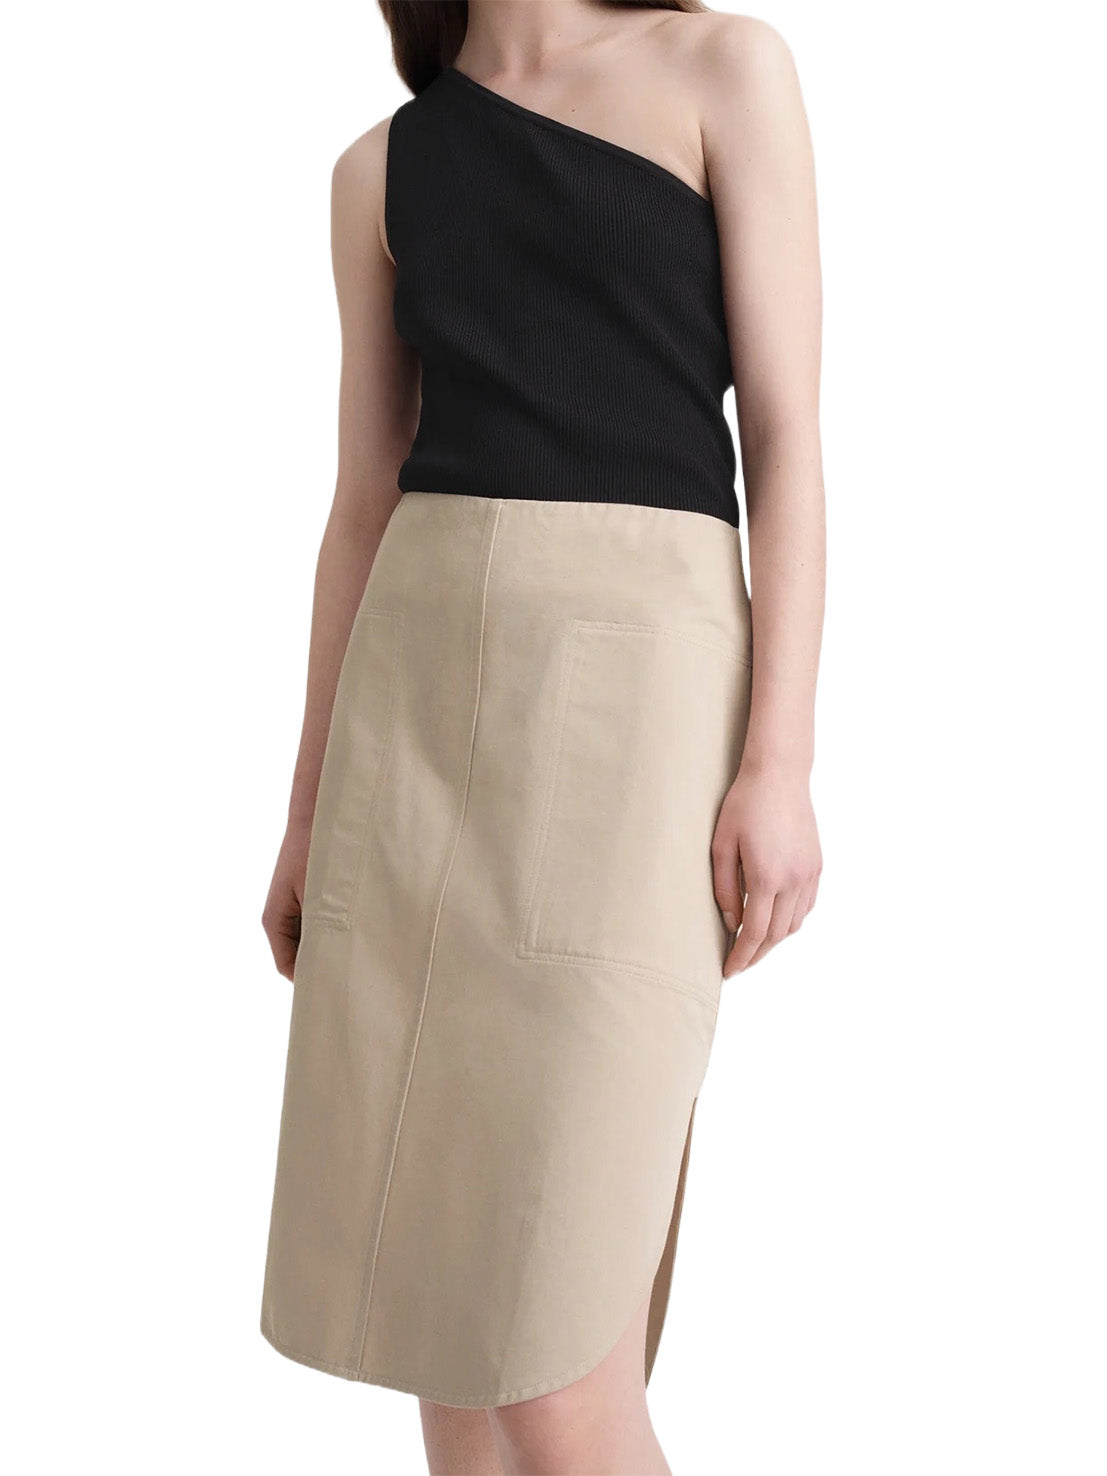 Curved-Hem Cotton Skirt in Overcast Beige